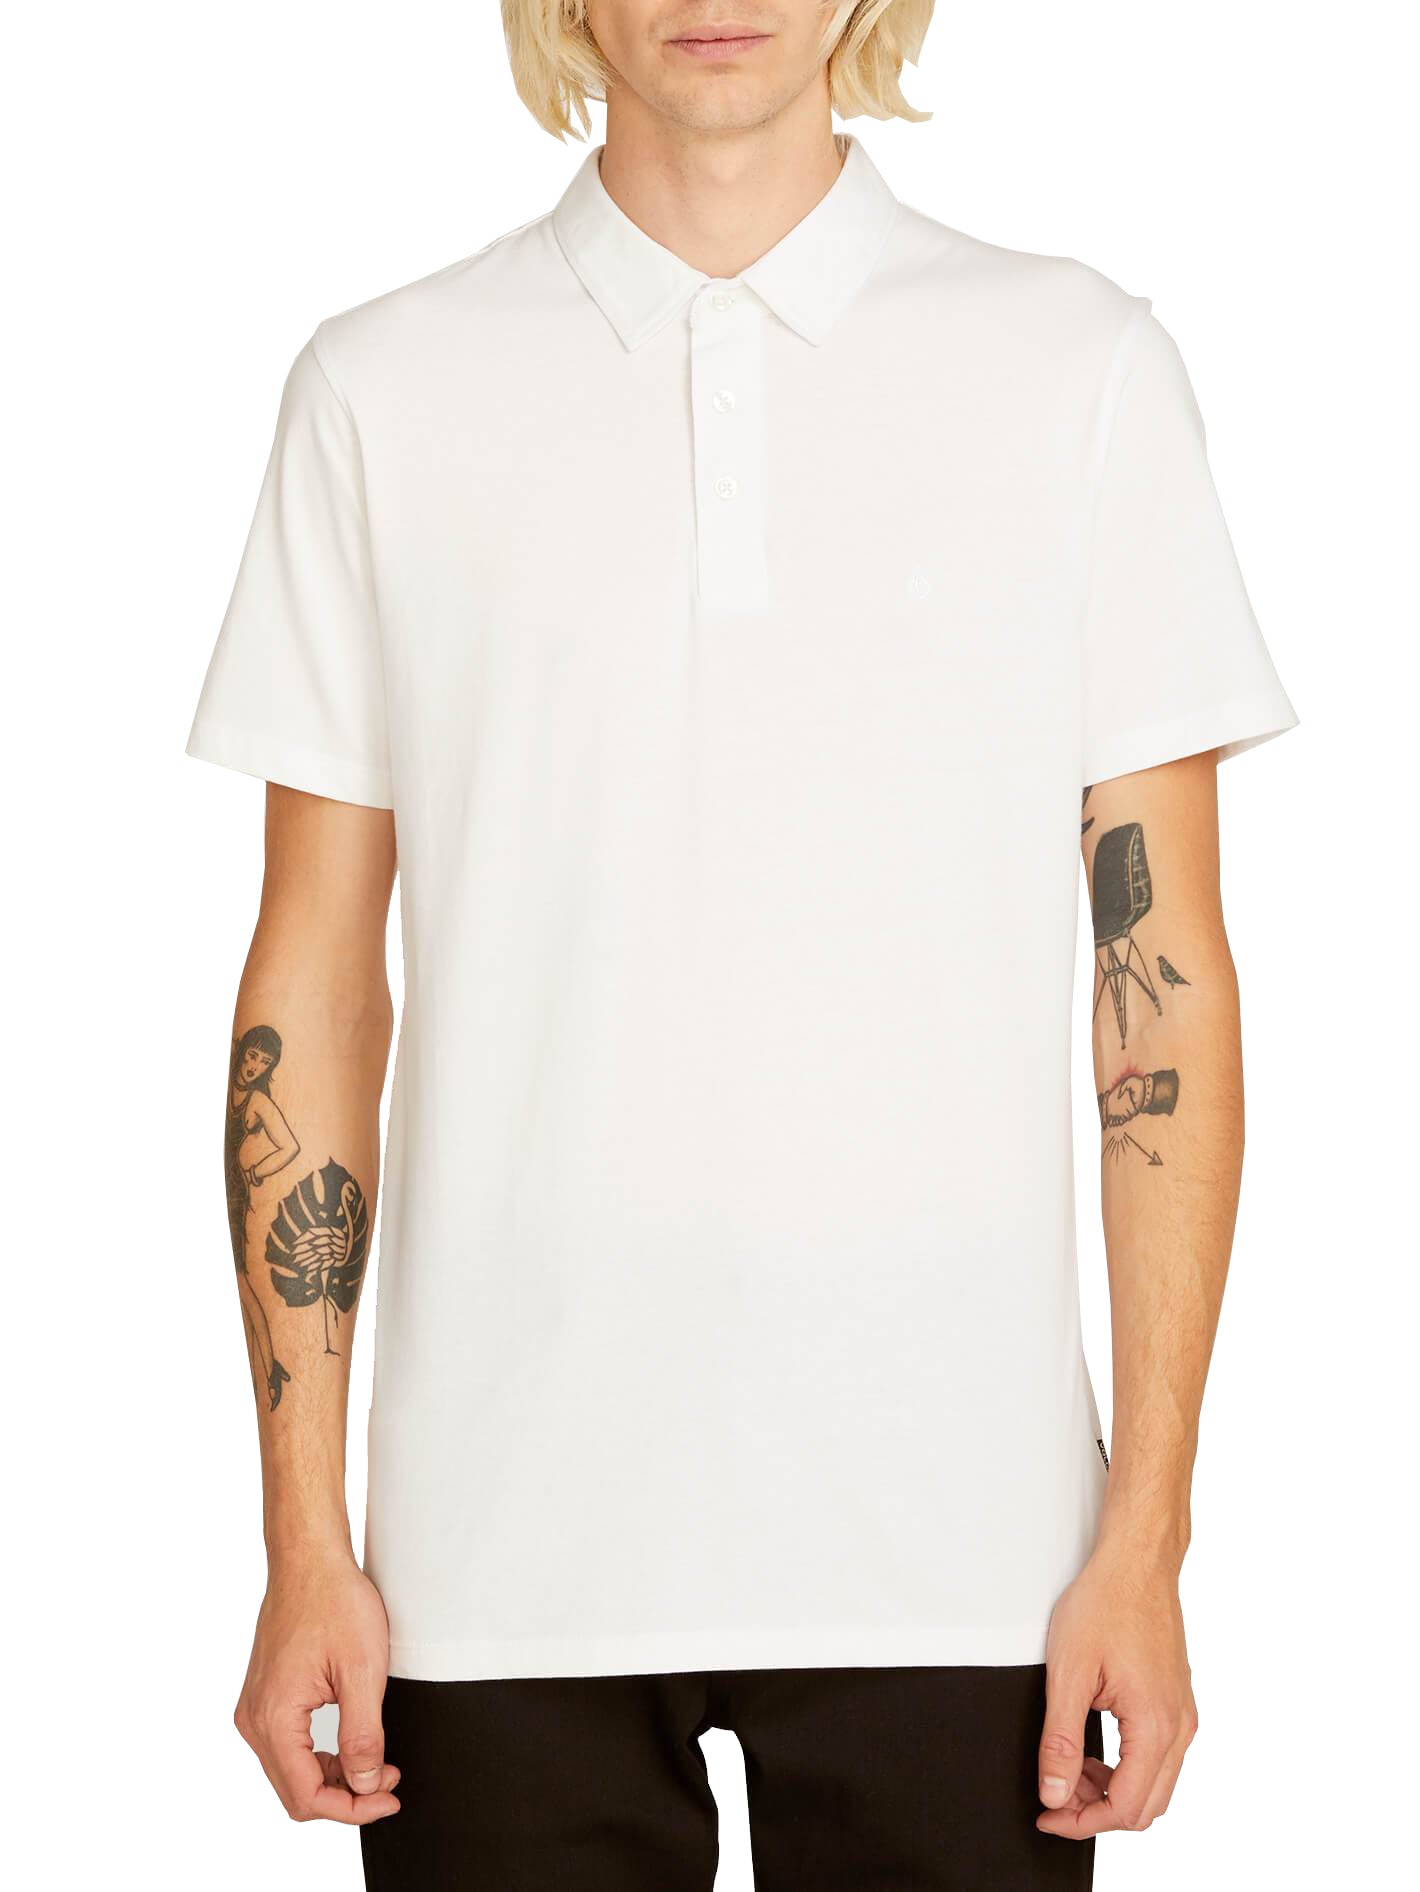 Volcom Wowzer Polo S/S Shirt White S